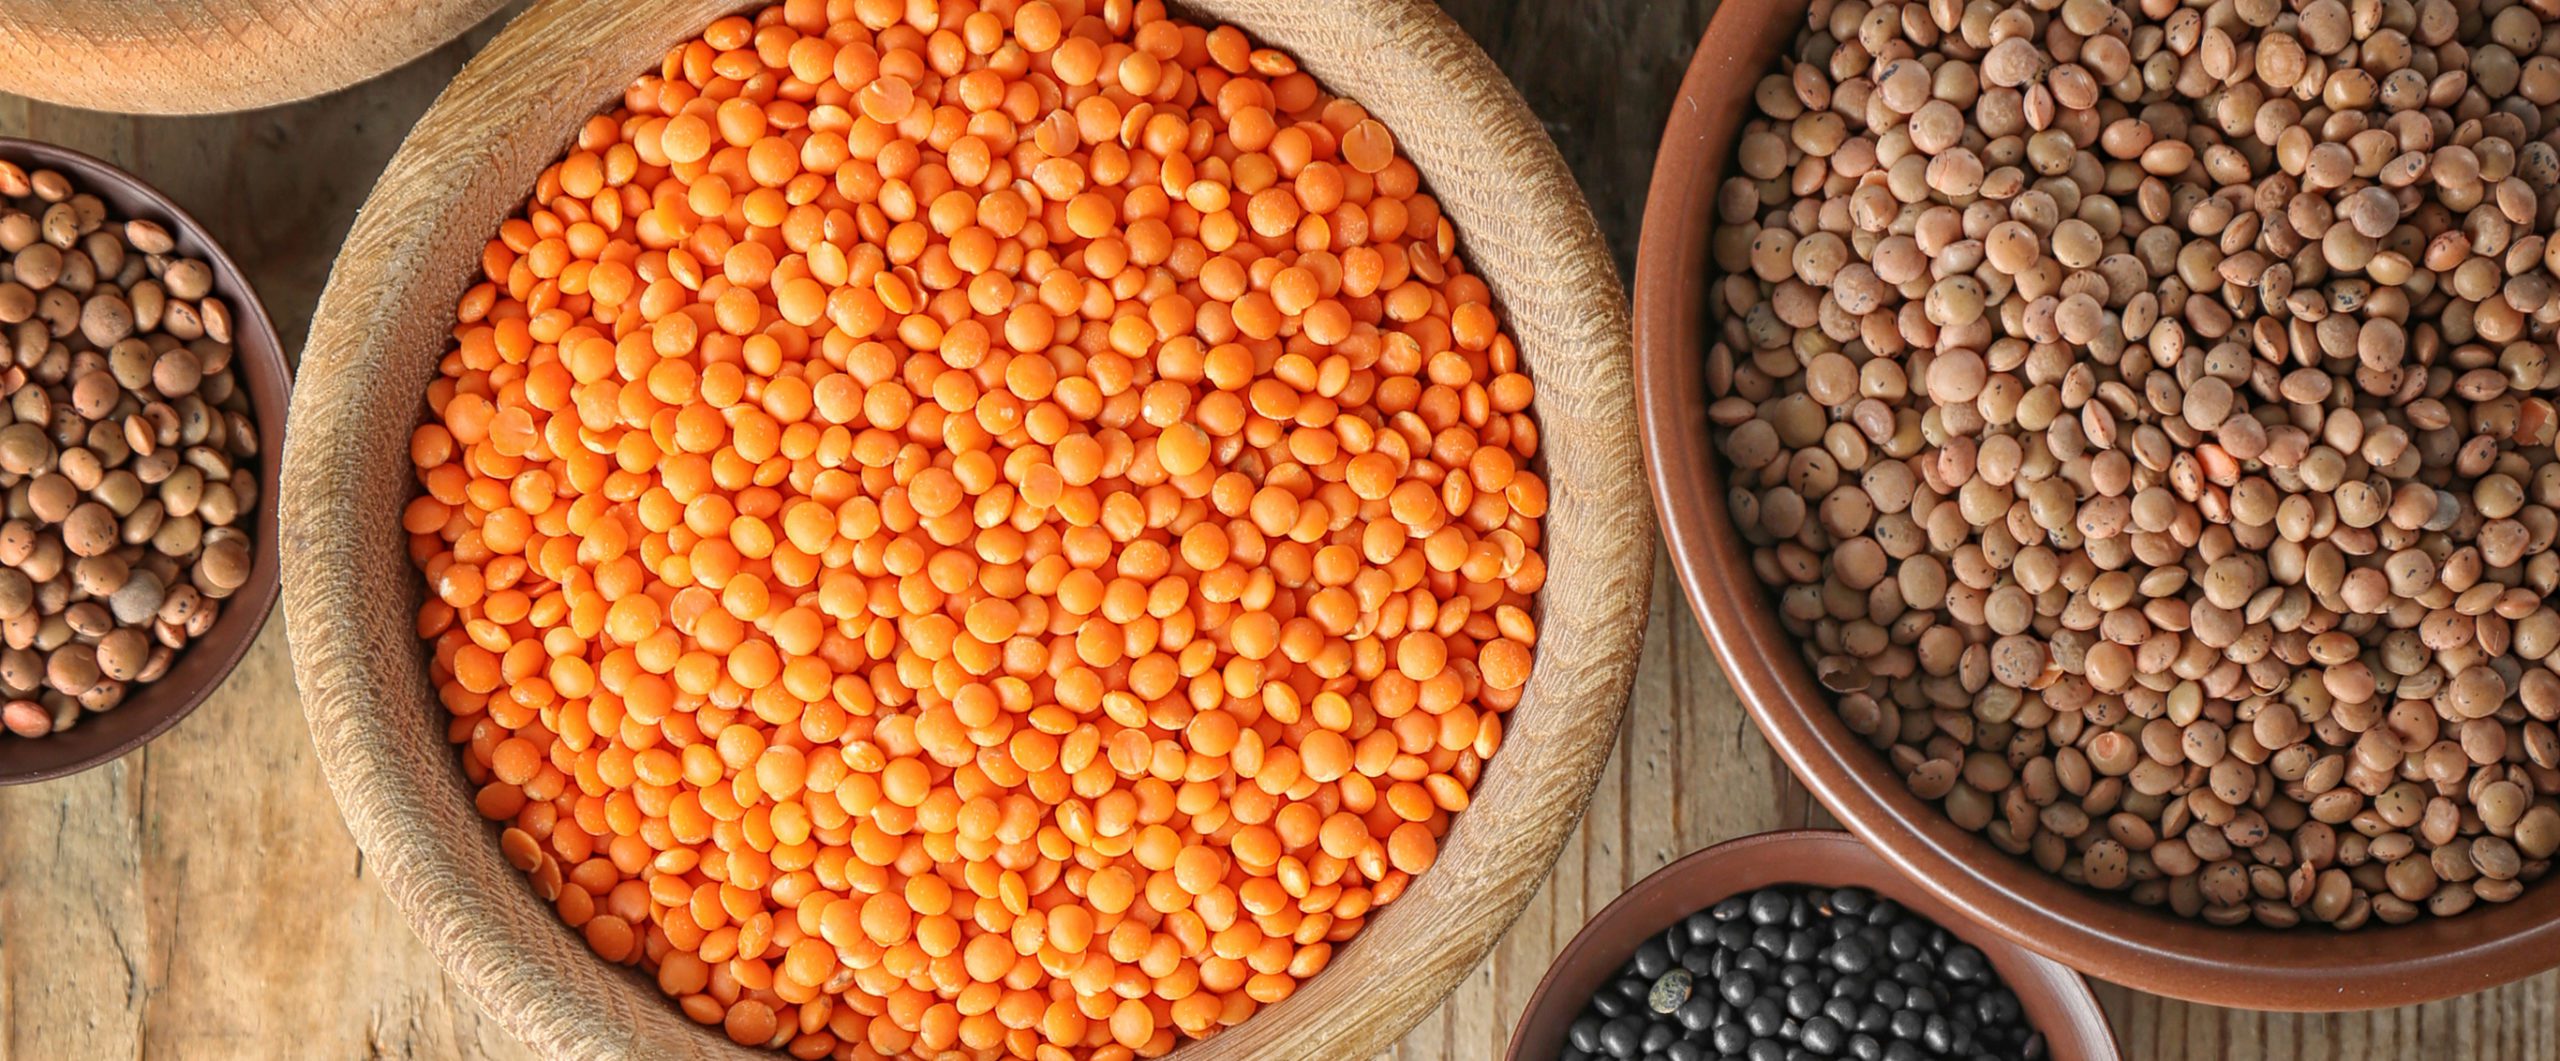 lentils different types